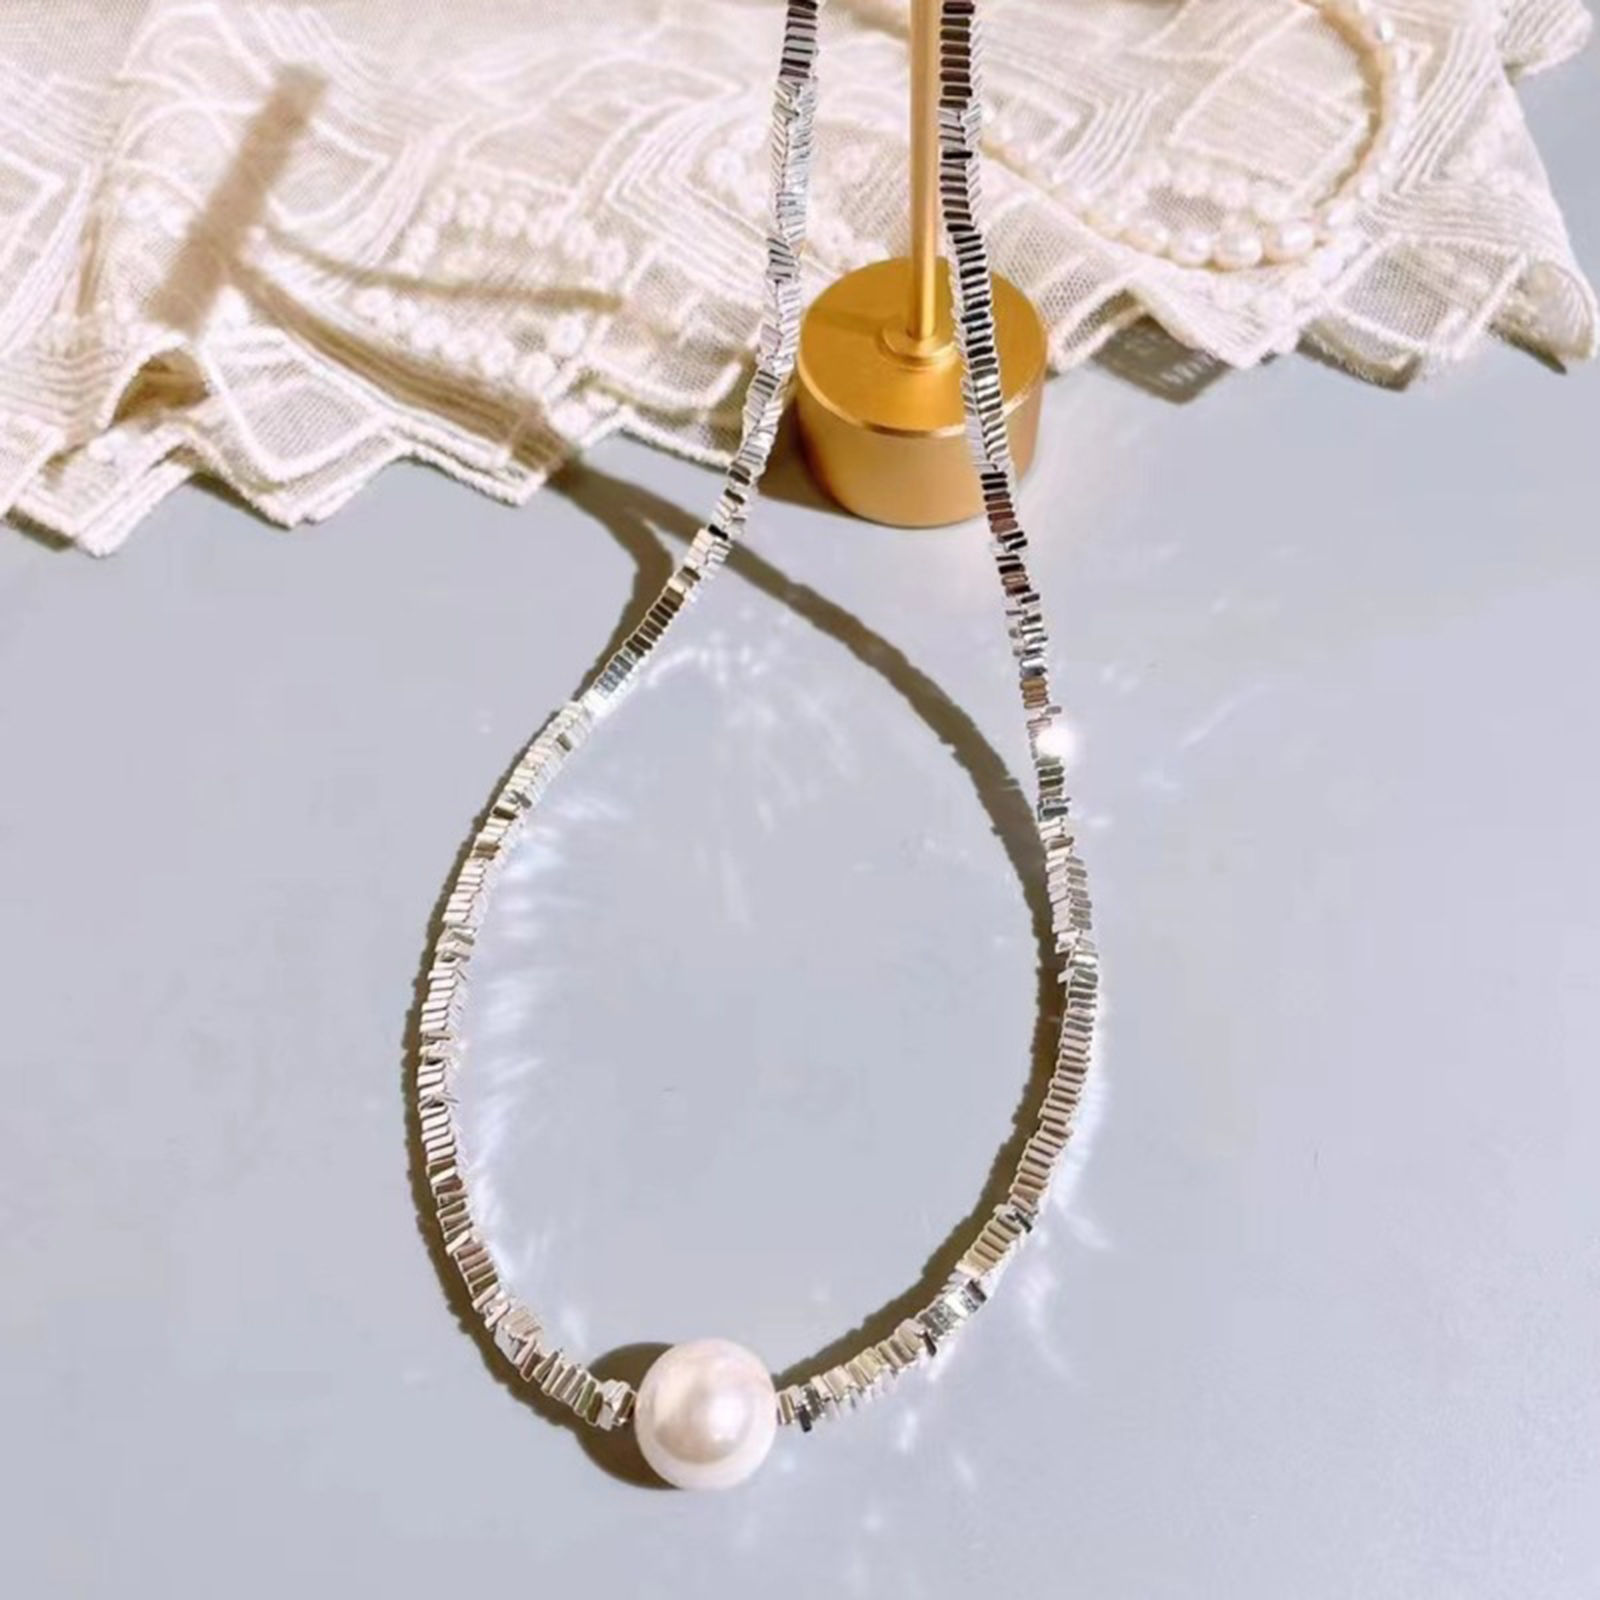 Bild von Stilvoll Perlenkette Versilbert Imitat Perle 1 Strang